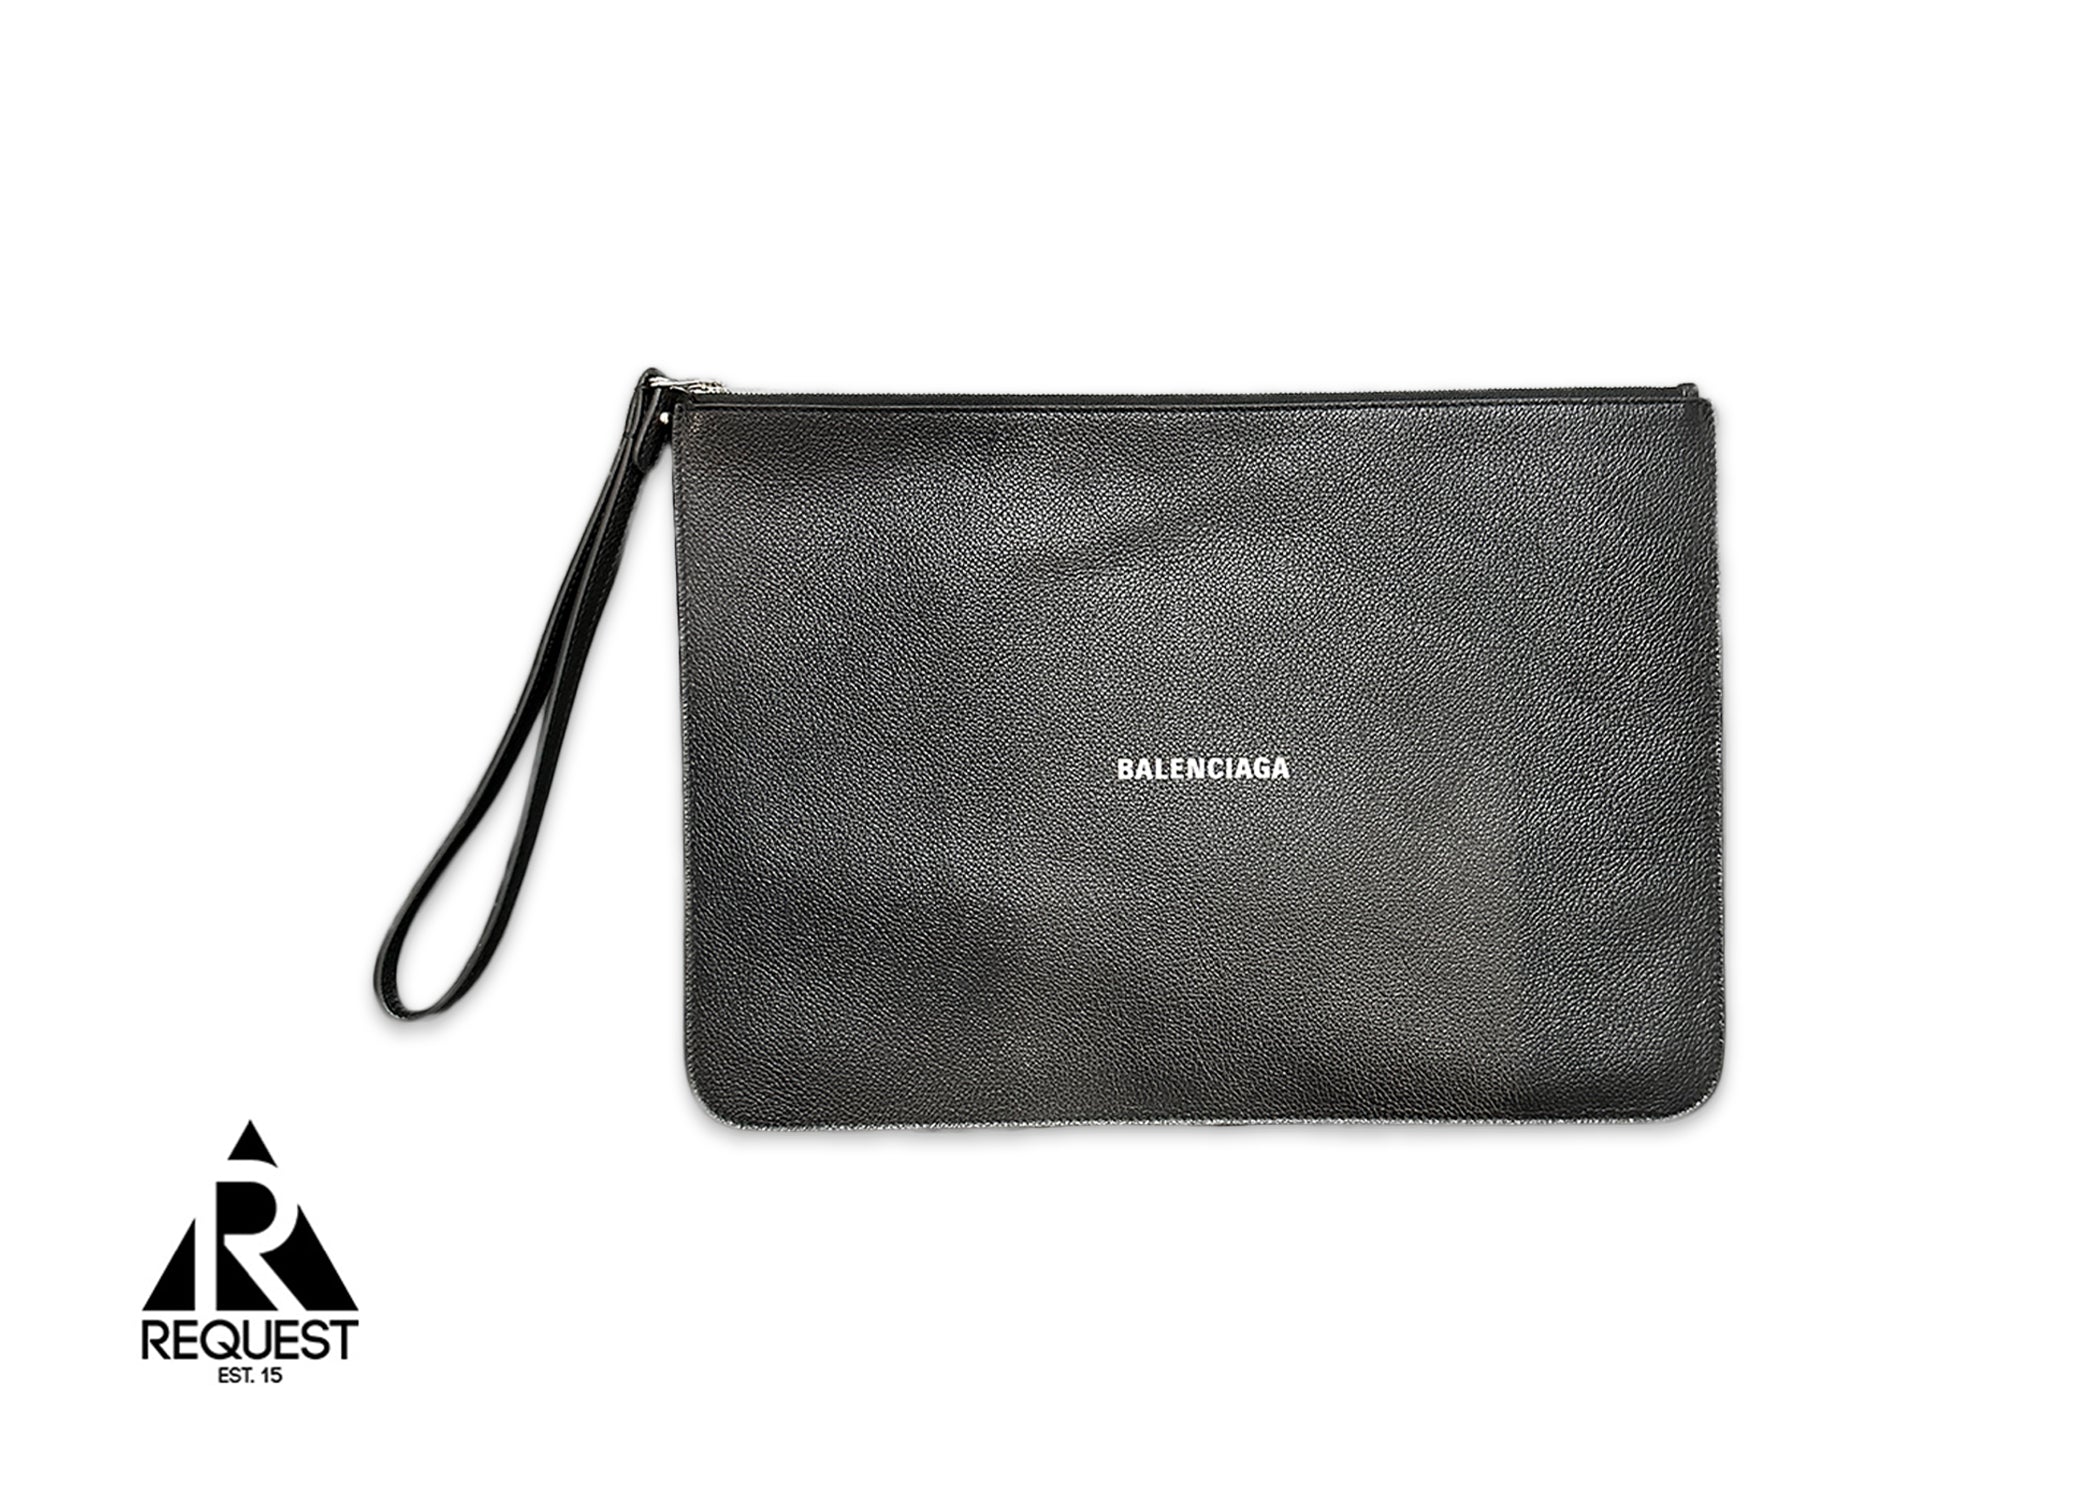 Balenciaga Cash Zipped Clutch Bag "Black"